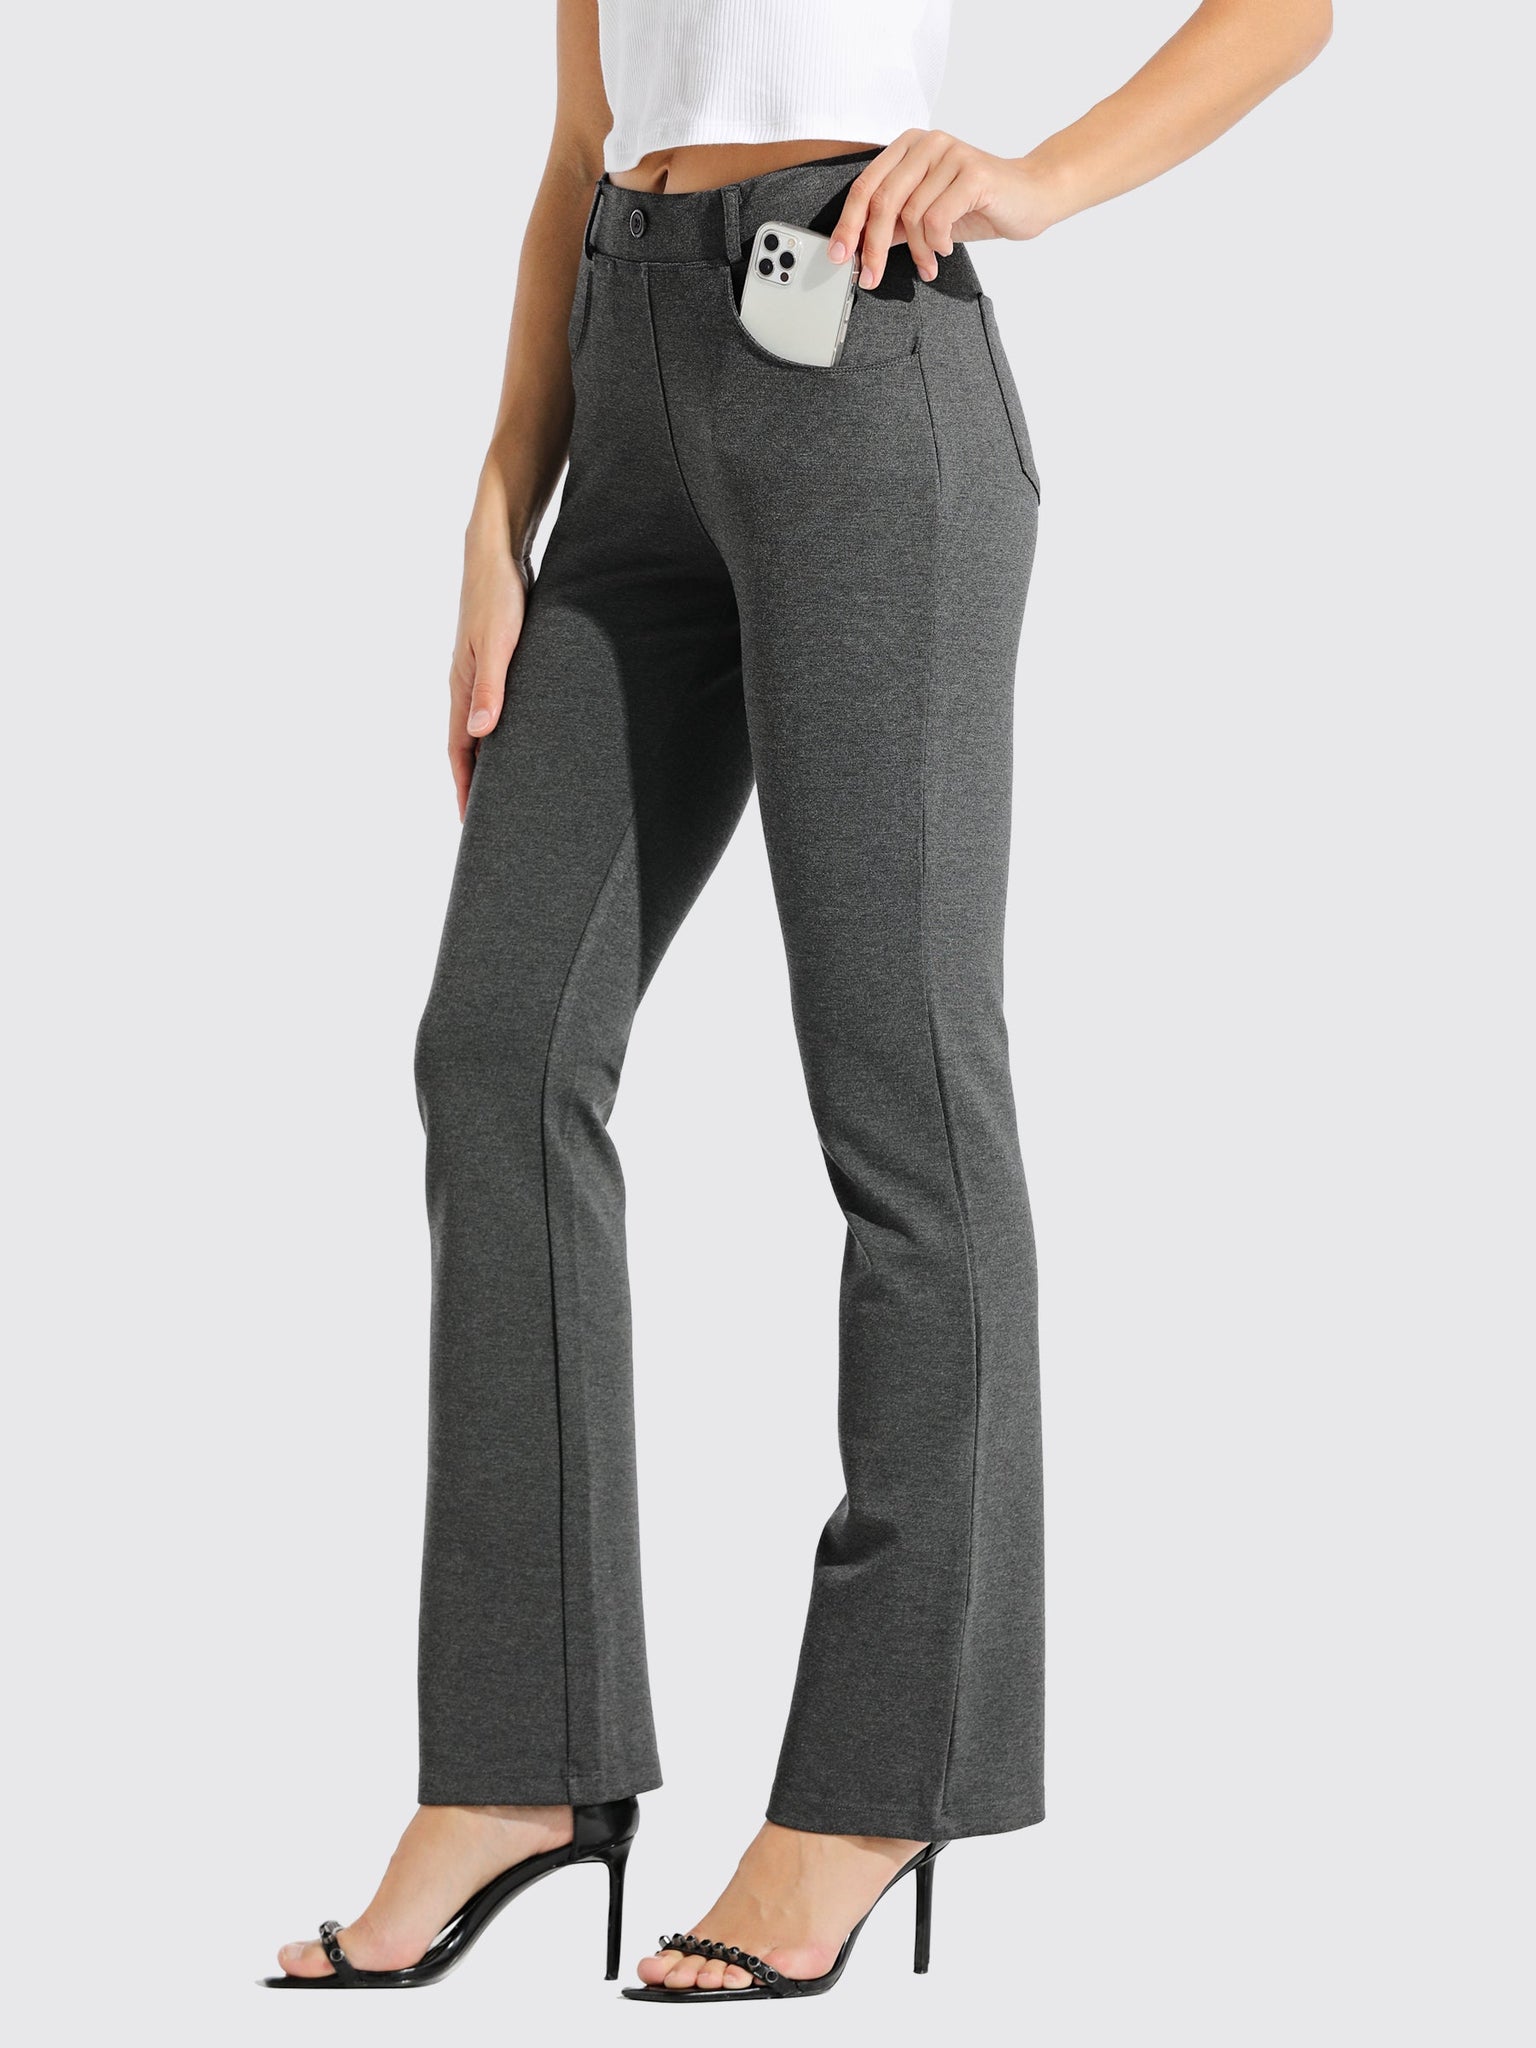 Khaki Twill Betabrand Dress Pant Yoga Pants - Boot Cut- Sz Lg